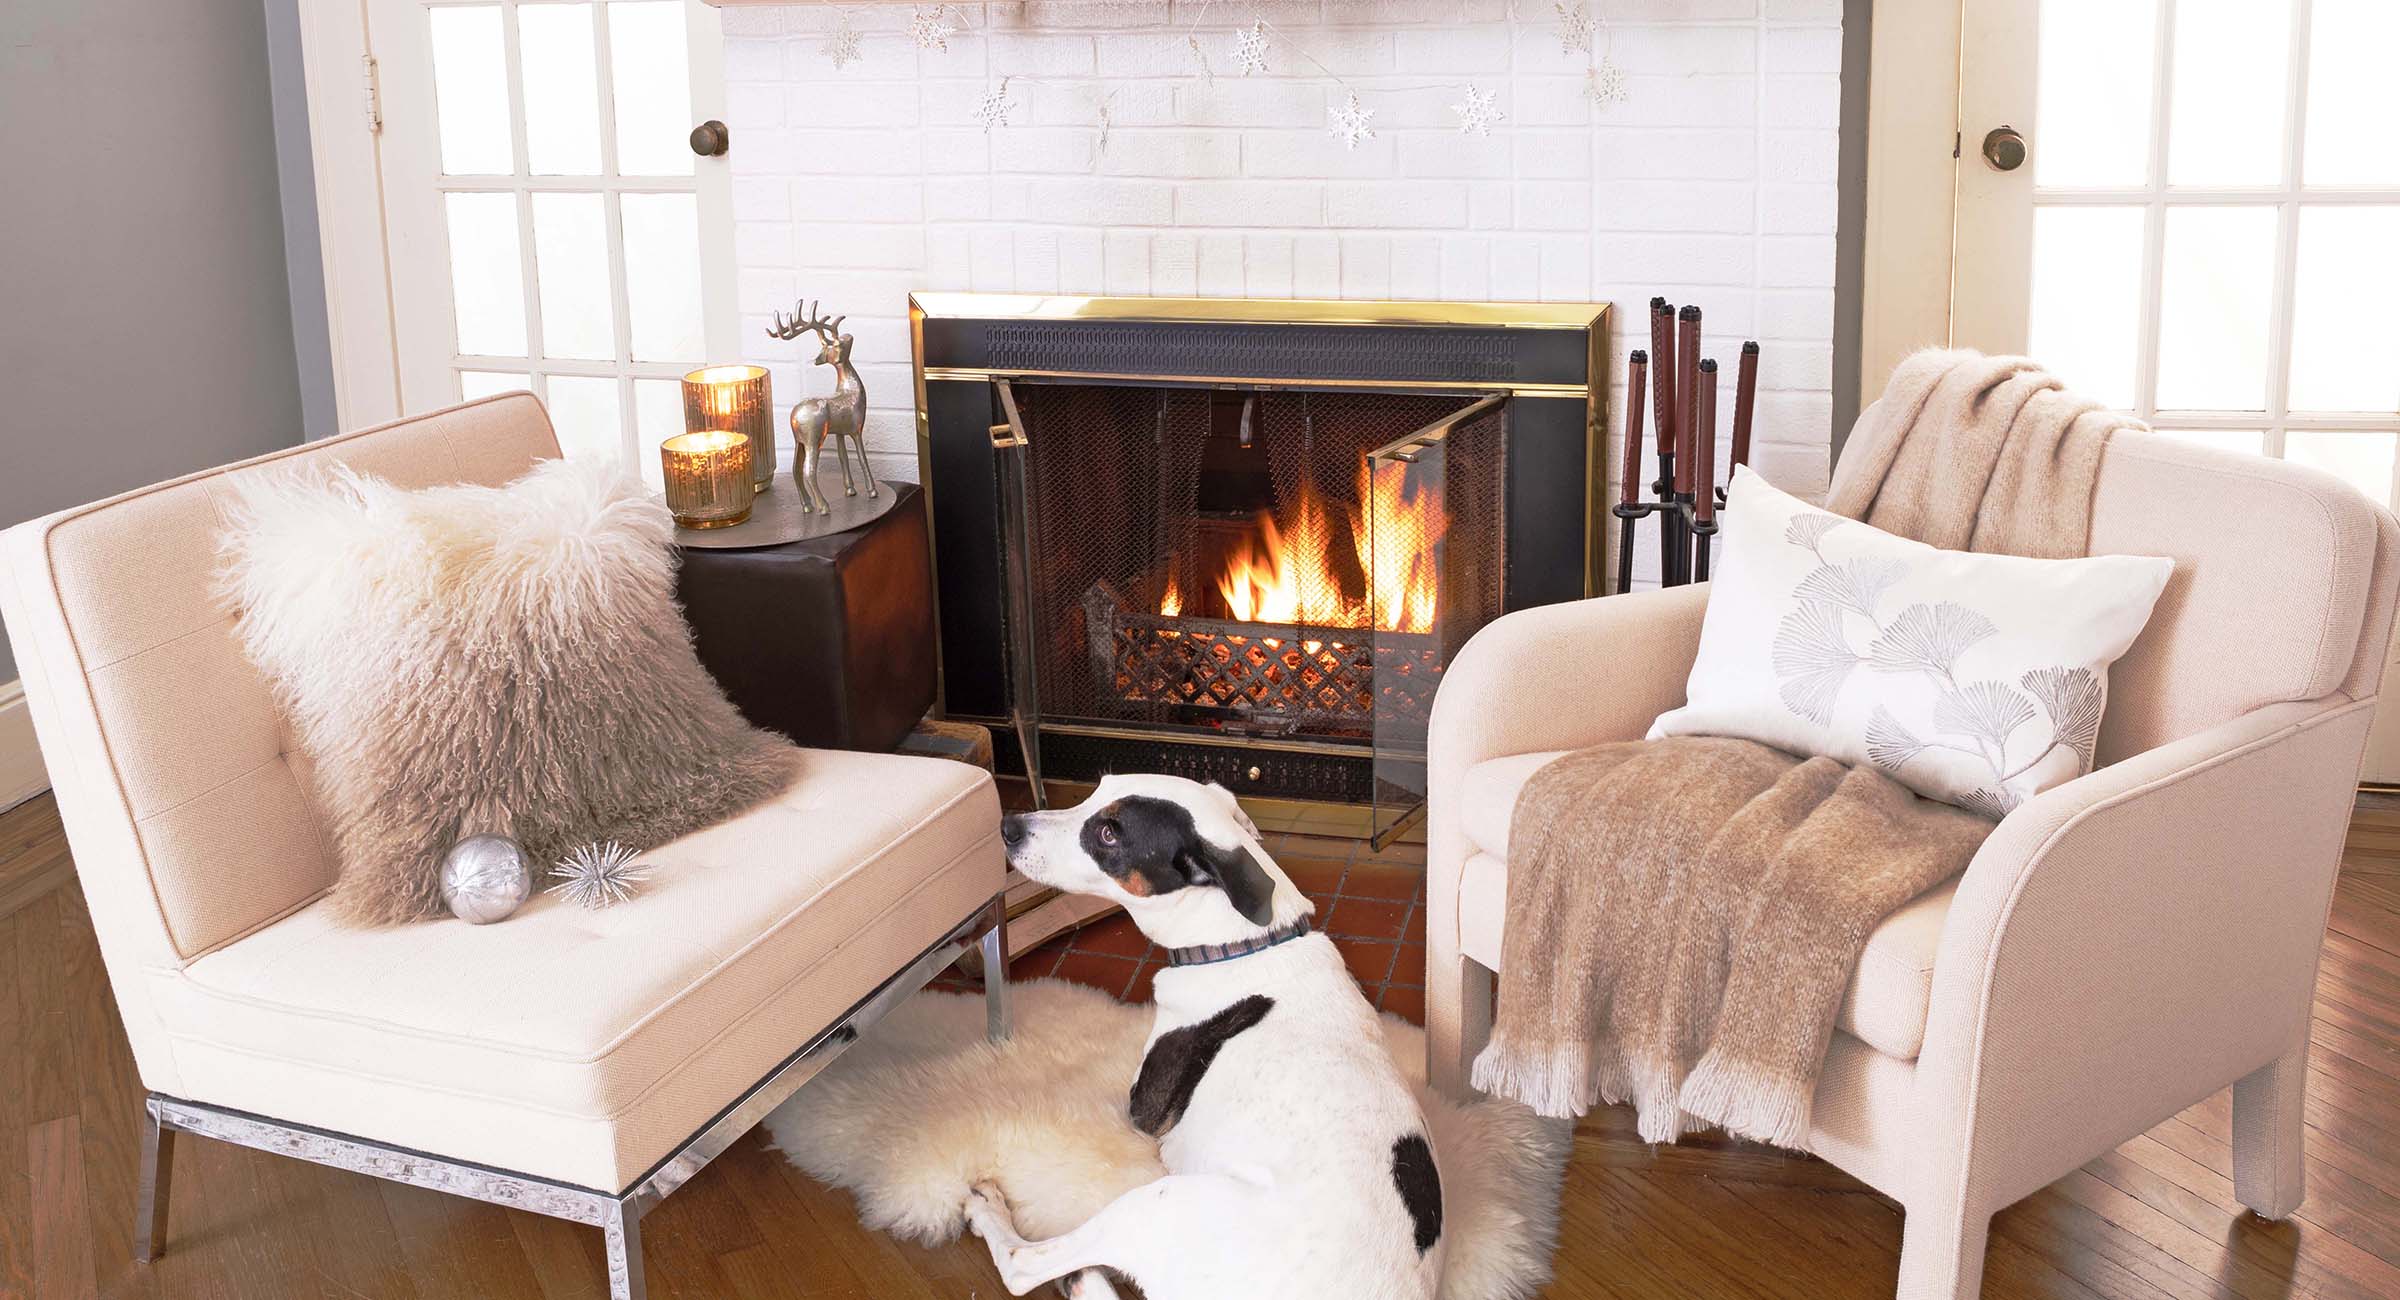 A cozy spot by the fireplace mantel